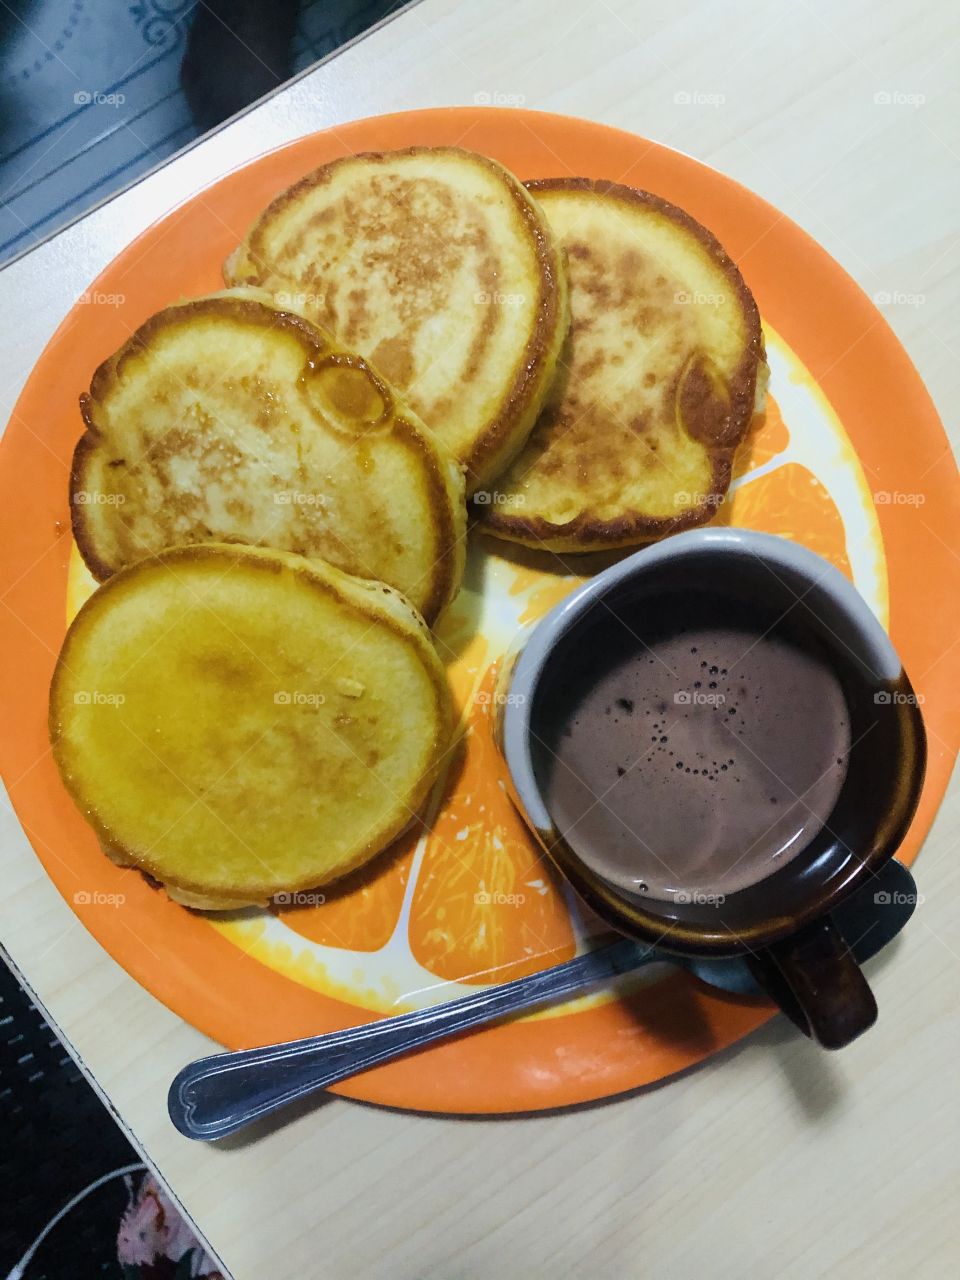 Pancake and hot chocolate.